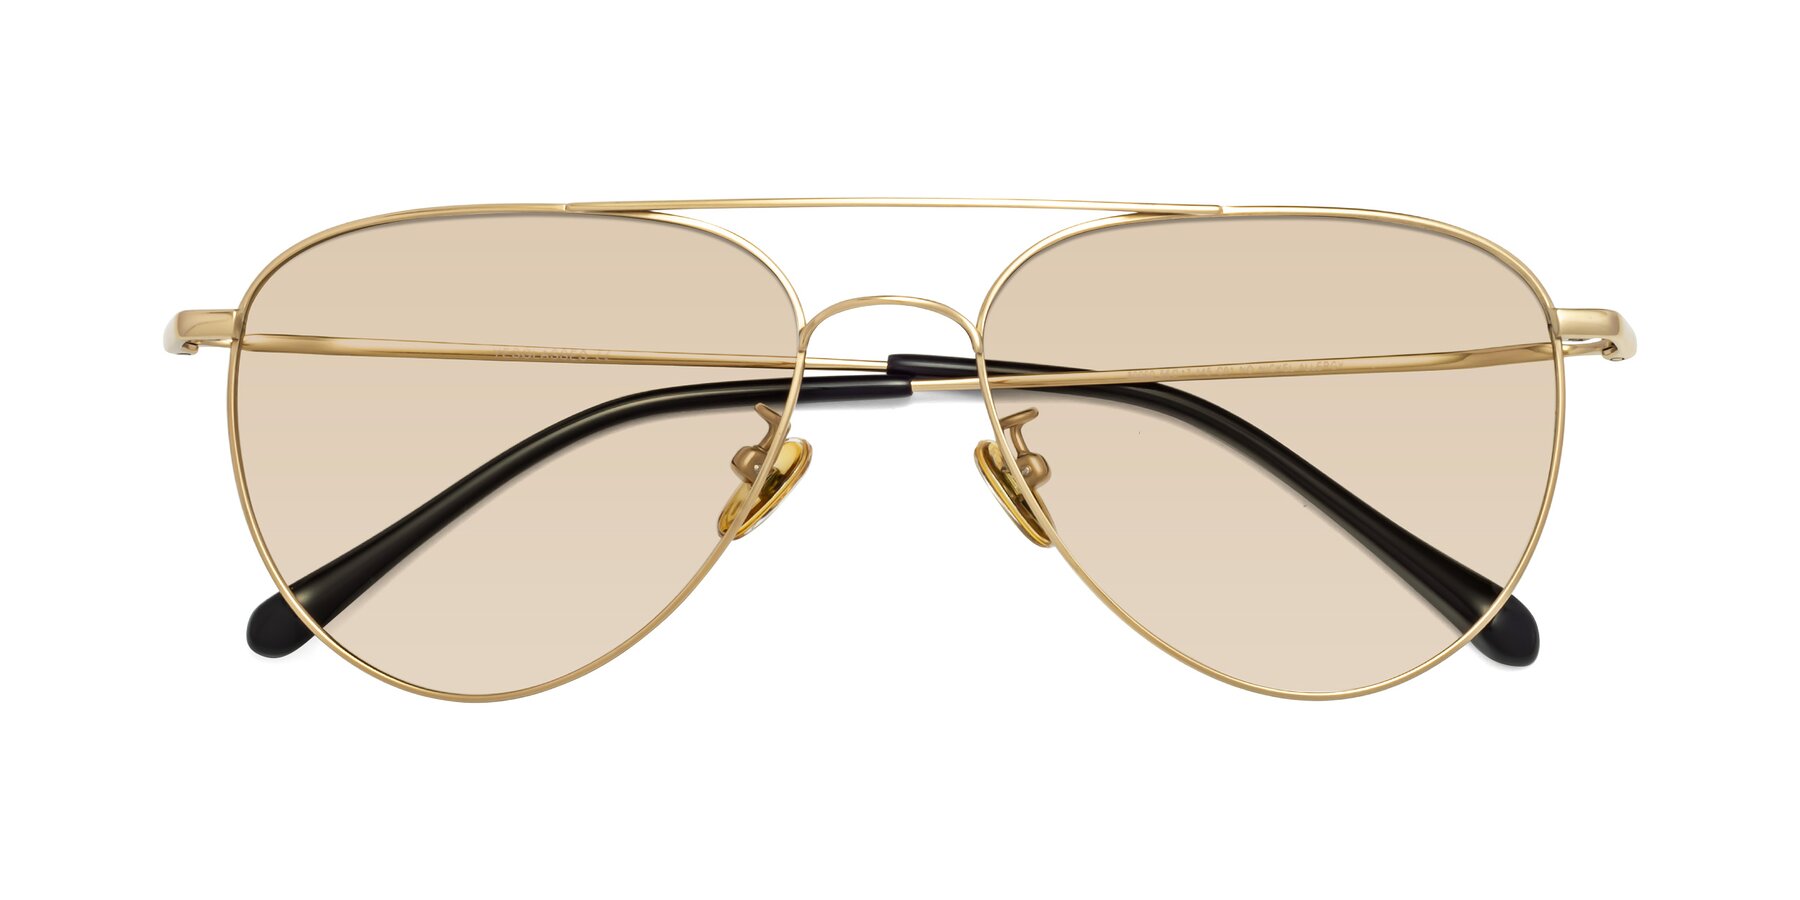 Men's Aviator Sunglasses| Durable Metal & Polarized | All Citizens